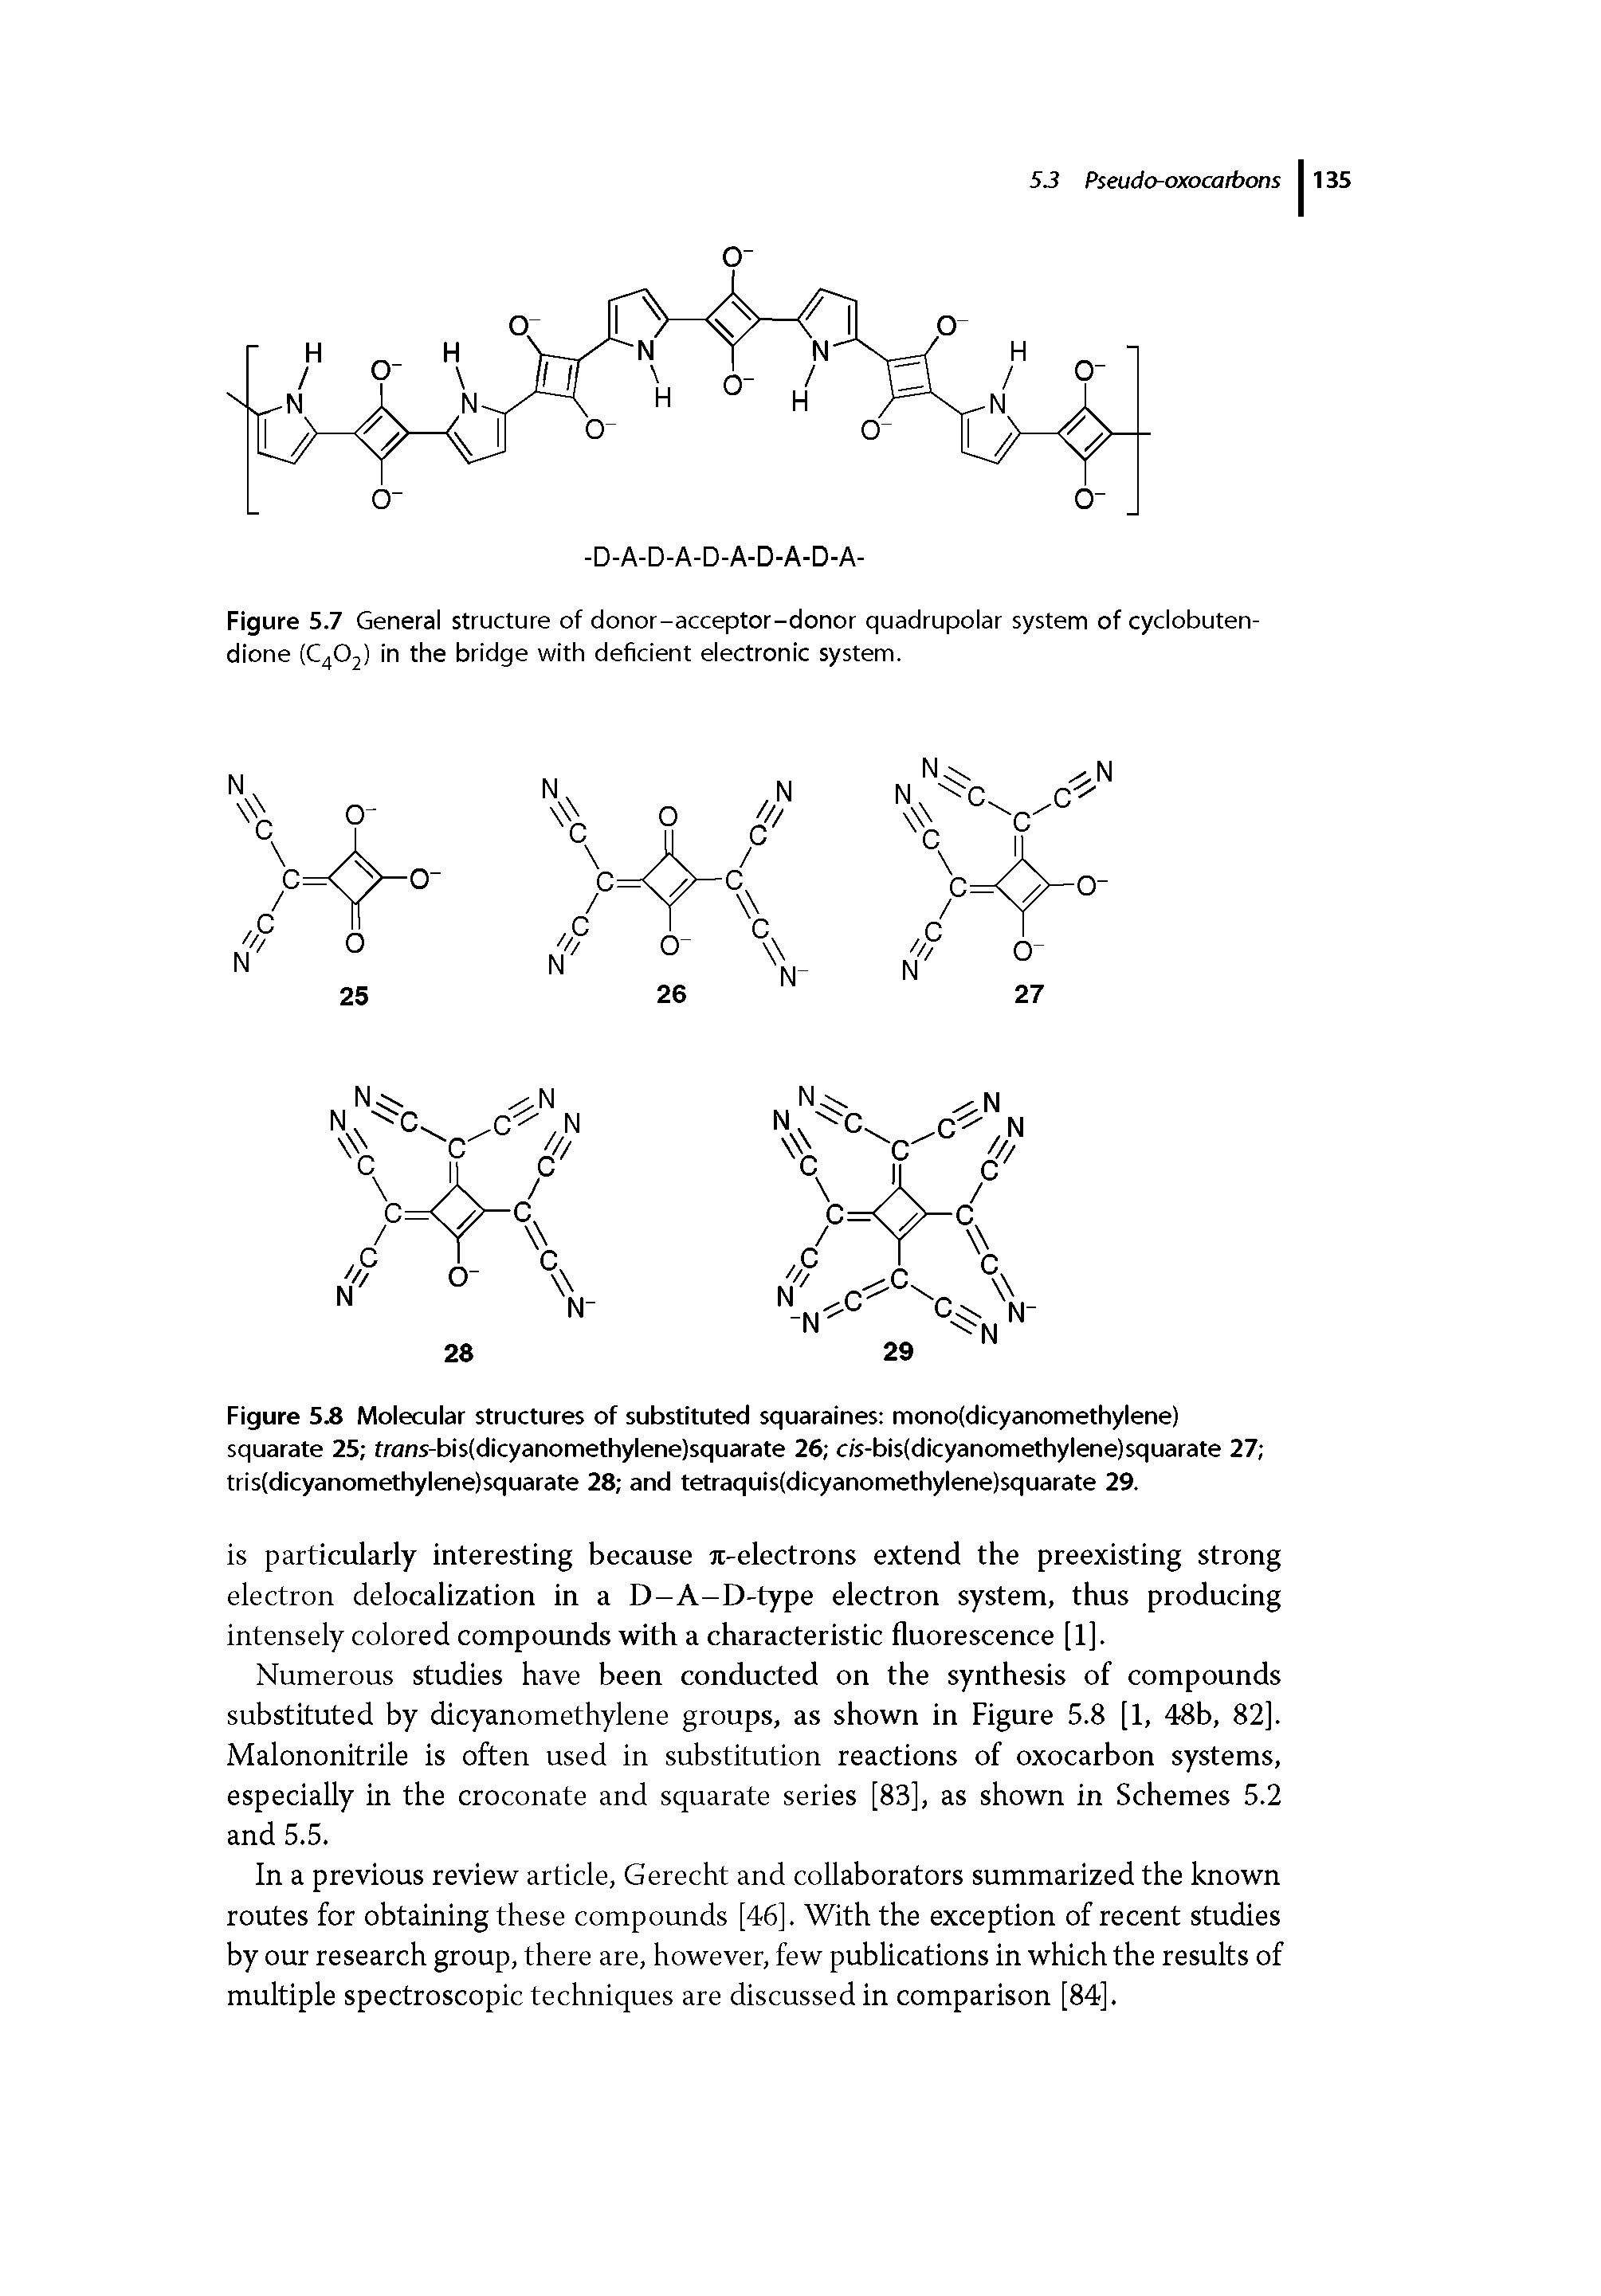 Figure 5.8 Molecular structures of substituted squaraines mono(dicyanomethylene) squarate 25 frans-bis(dicyanomethylene)squarate 26 c/s-bis(dicyanomethylene)squarate 27 tris(dicyanomethylene)squarate 28 and tetraquis(dicyanomethylene)squarate 29.